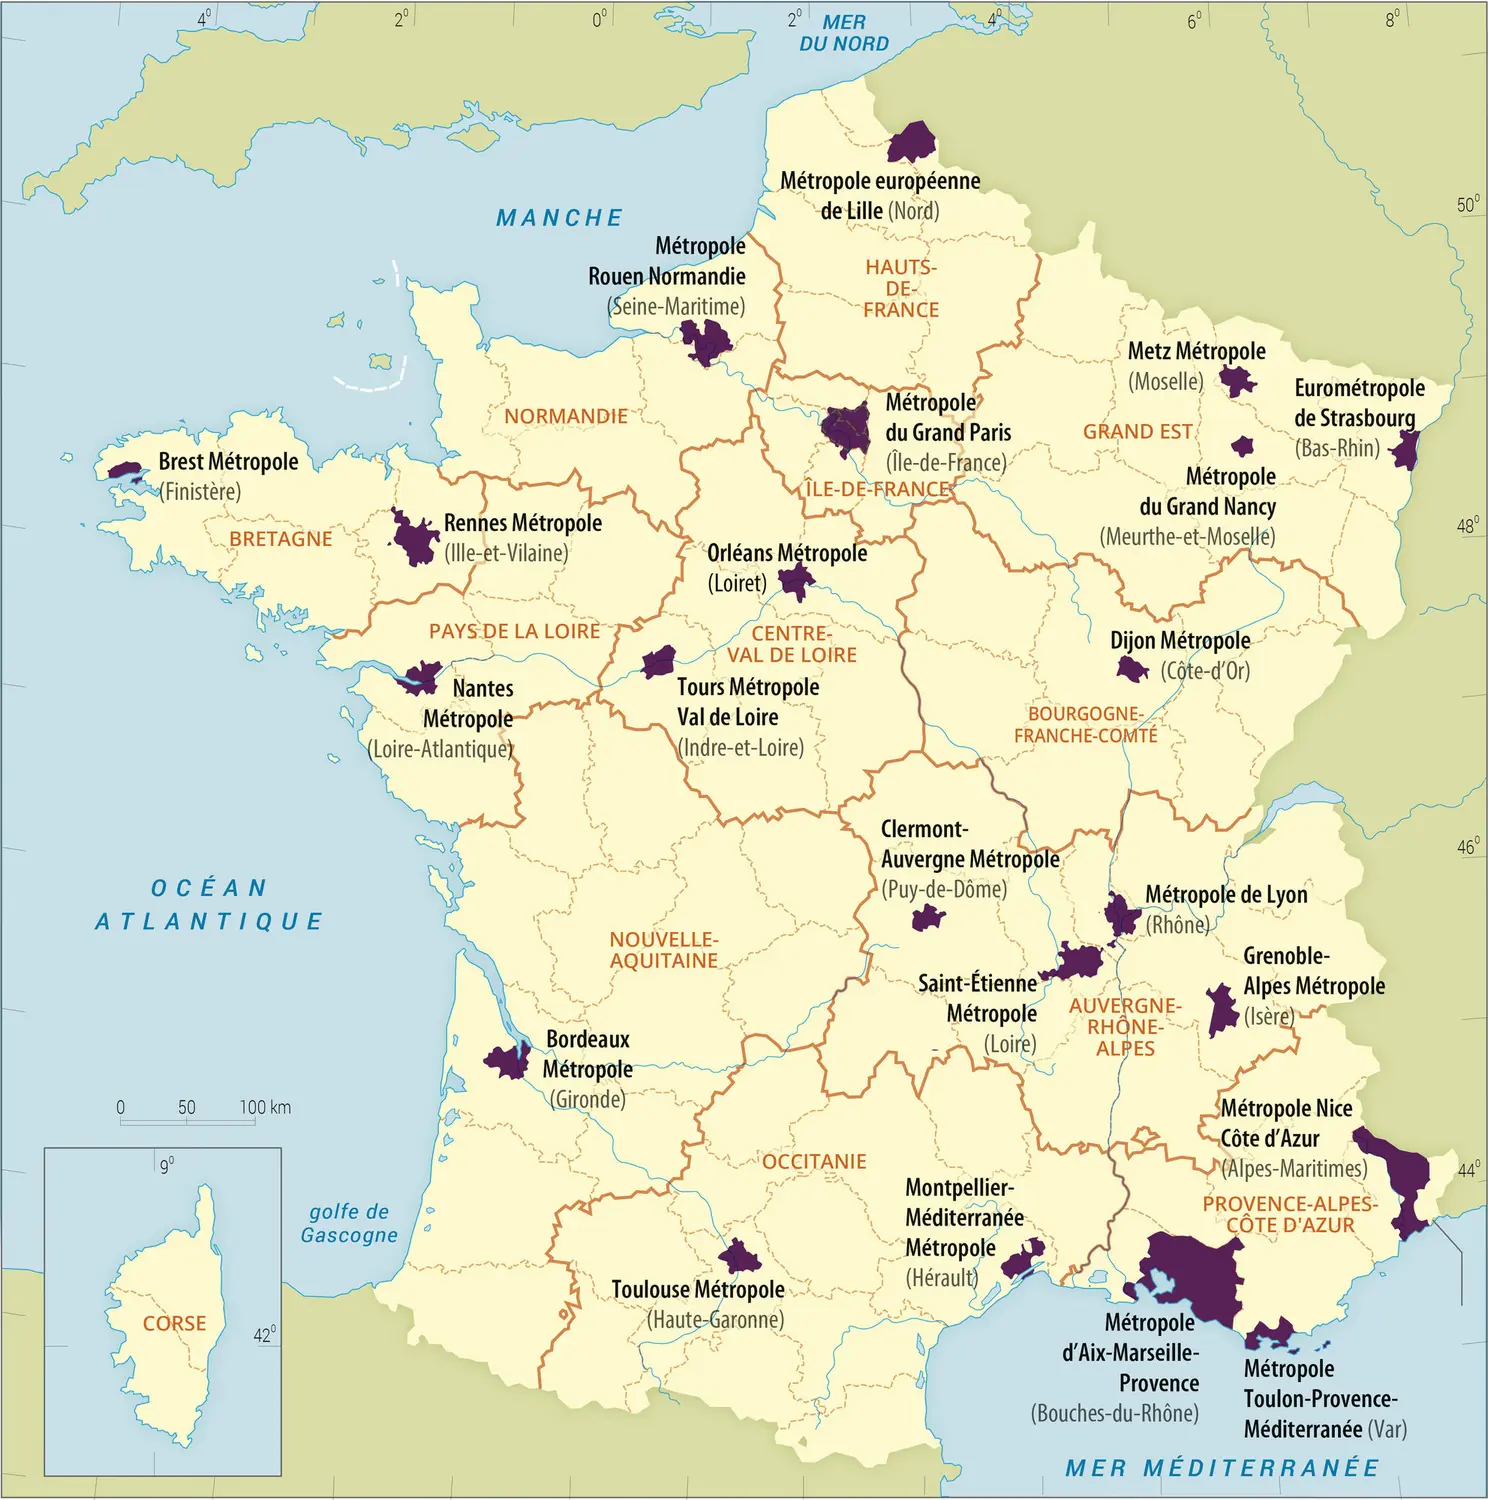 La métropolisation en France